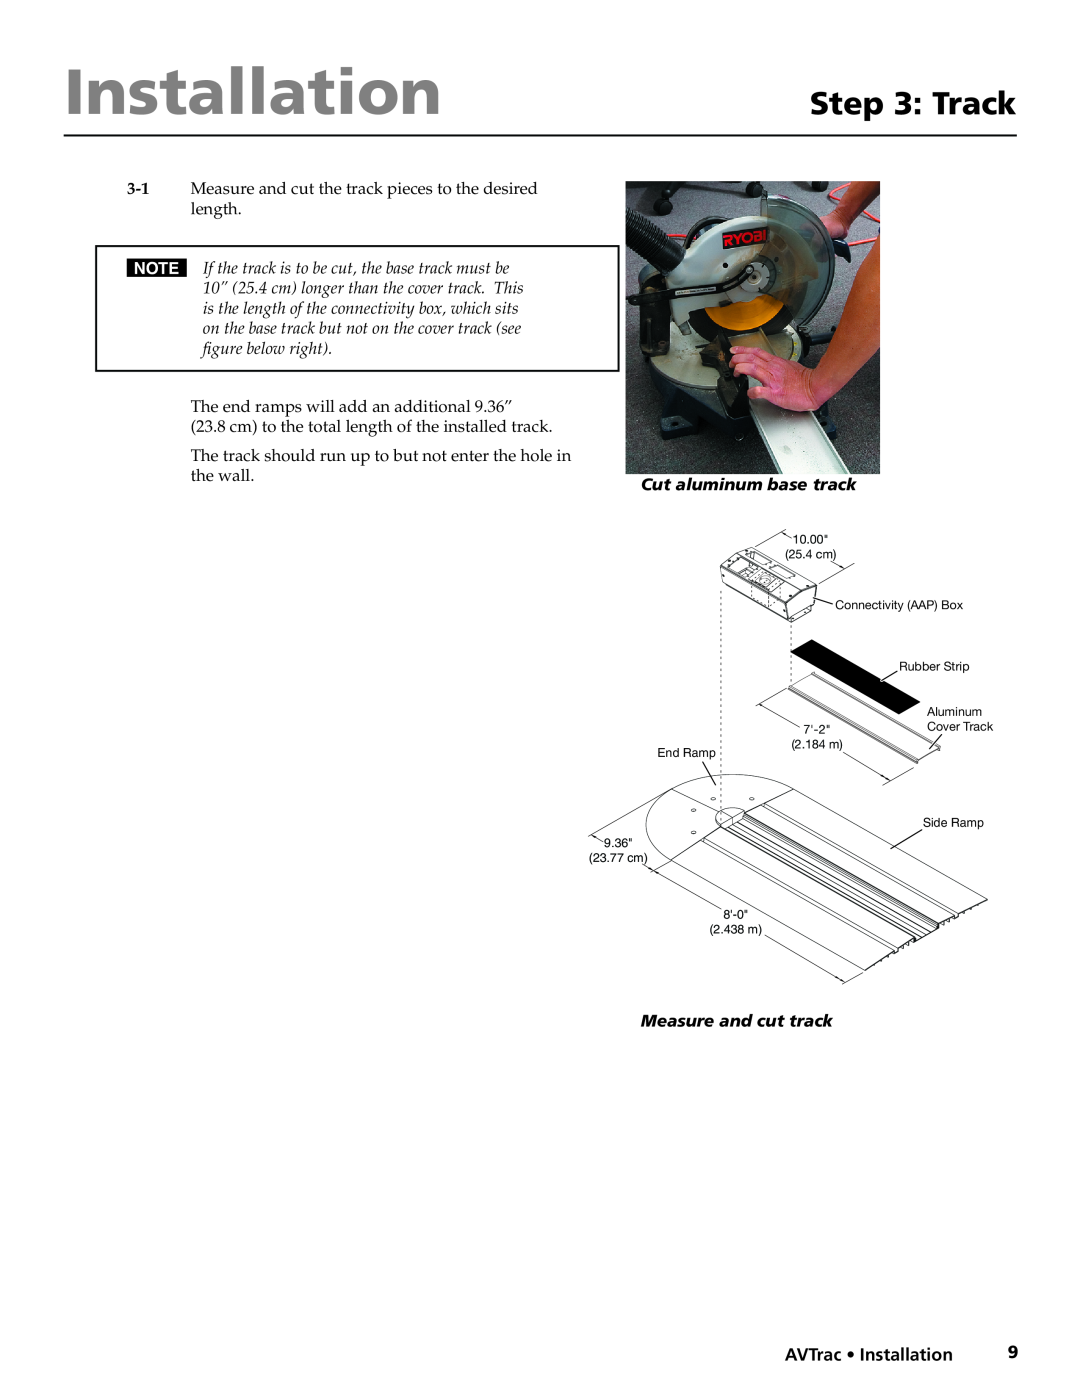 Extron electronic 42-122-xx manual Track, Cut aluminum base track, Measure and cut track, AVTrac Installation 